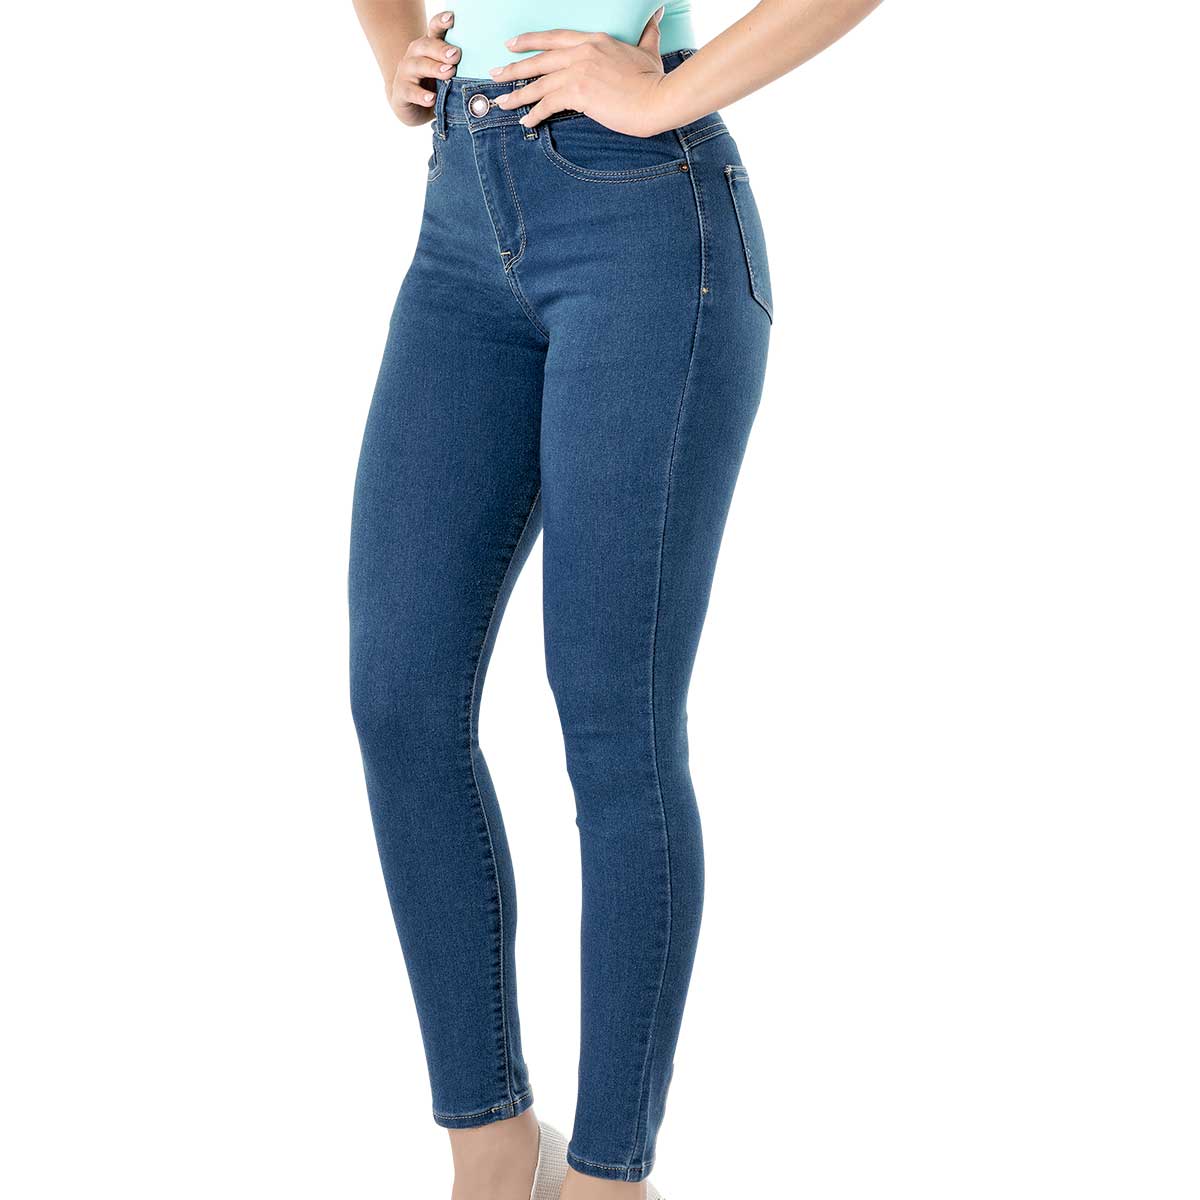 Pakar.com - Mayo: Regalos para mamá | Jeans para mujer cod-113129